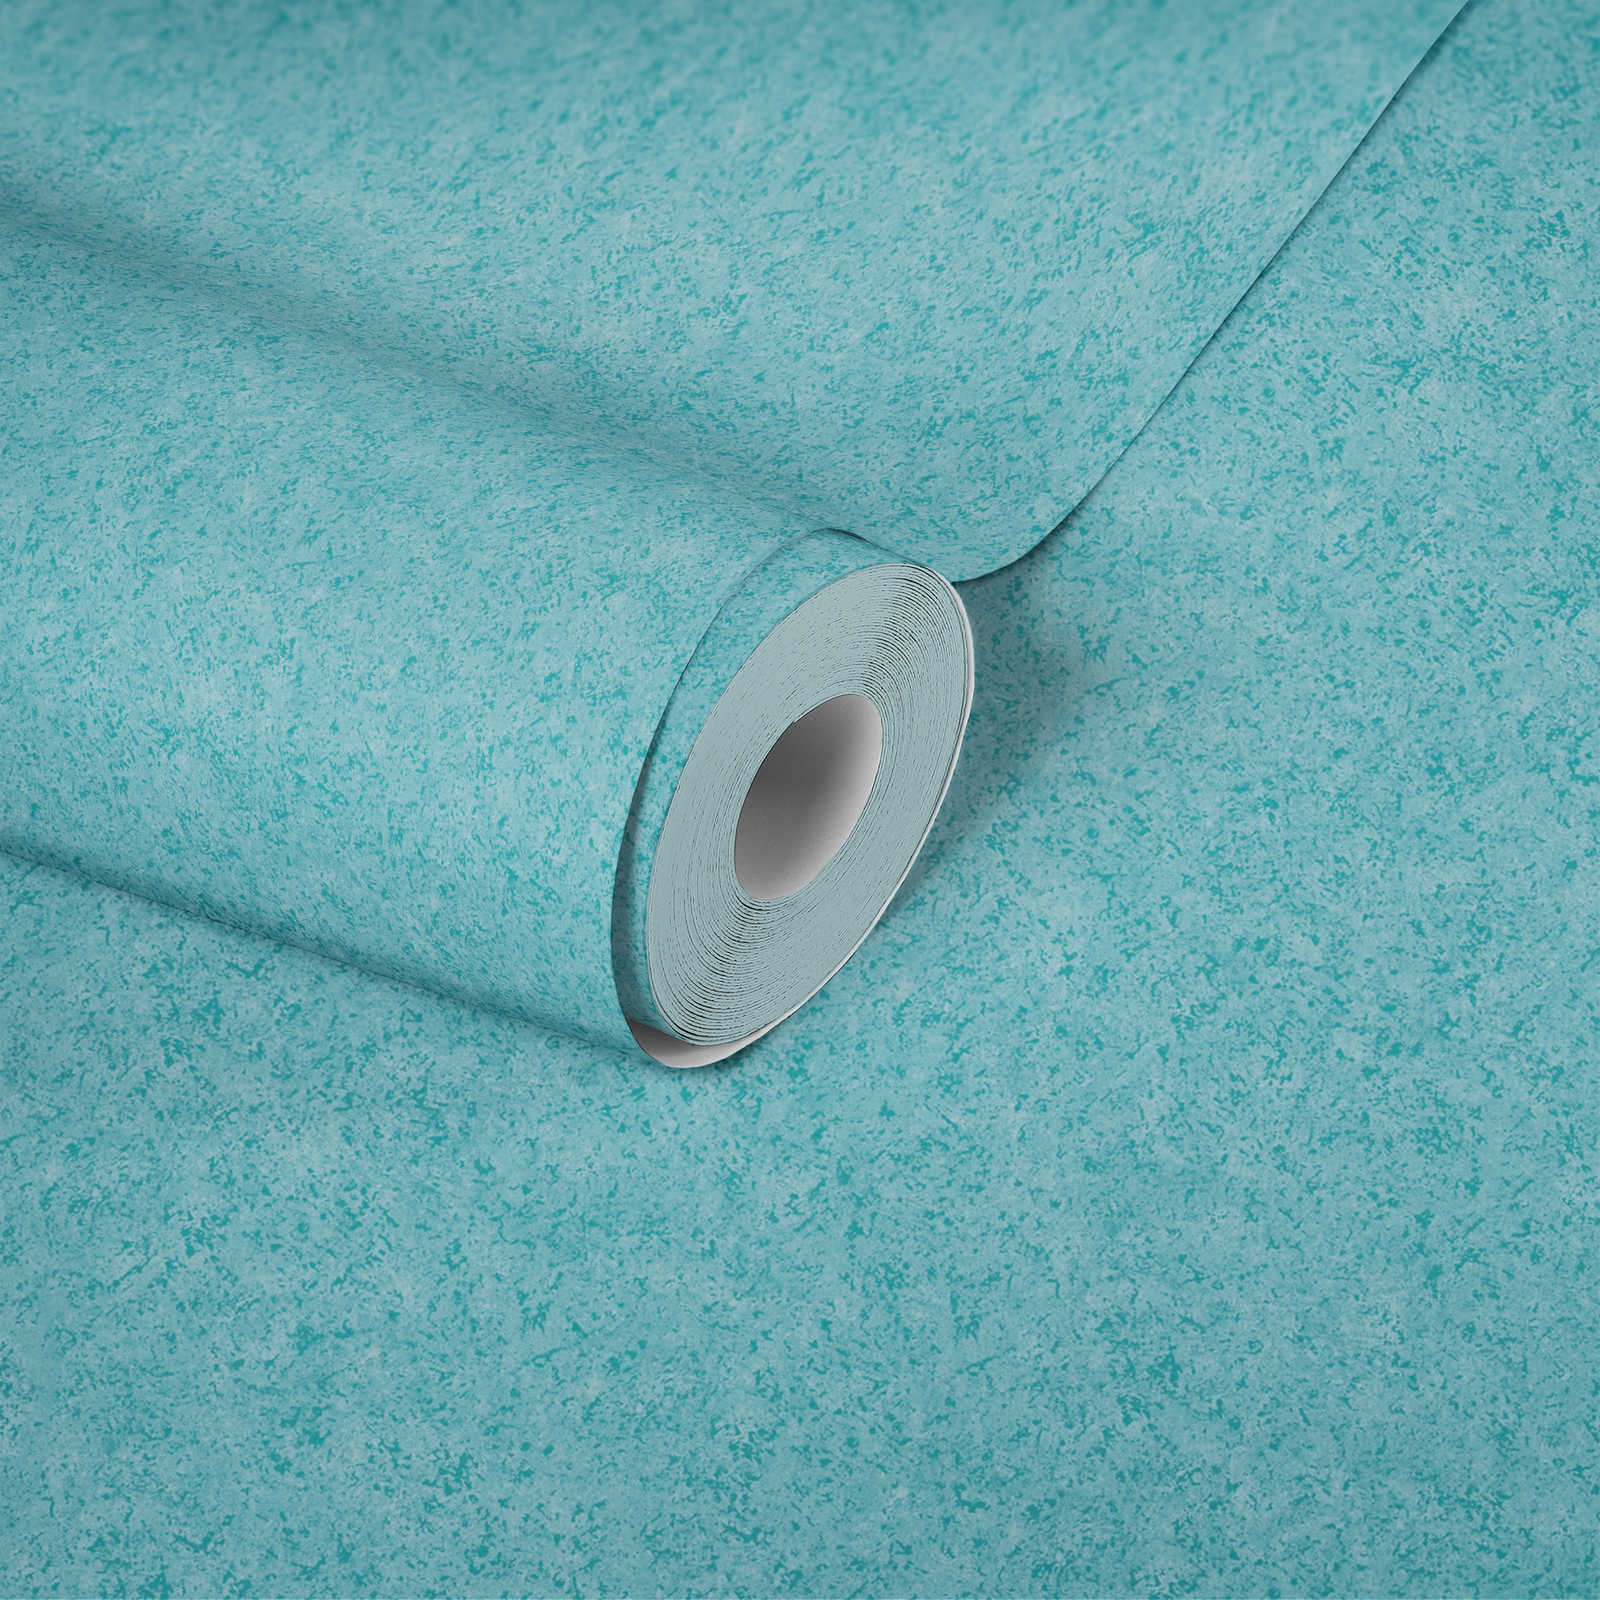             Non-woven wallpaper petrol plaster look with matte pattern - blue, green
        